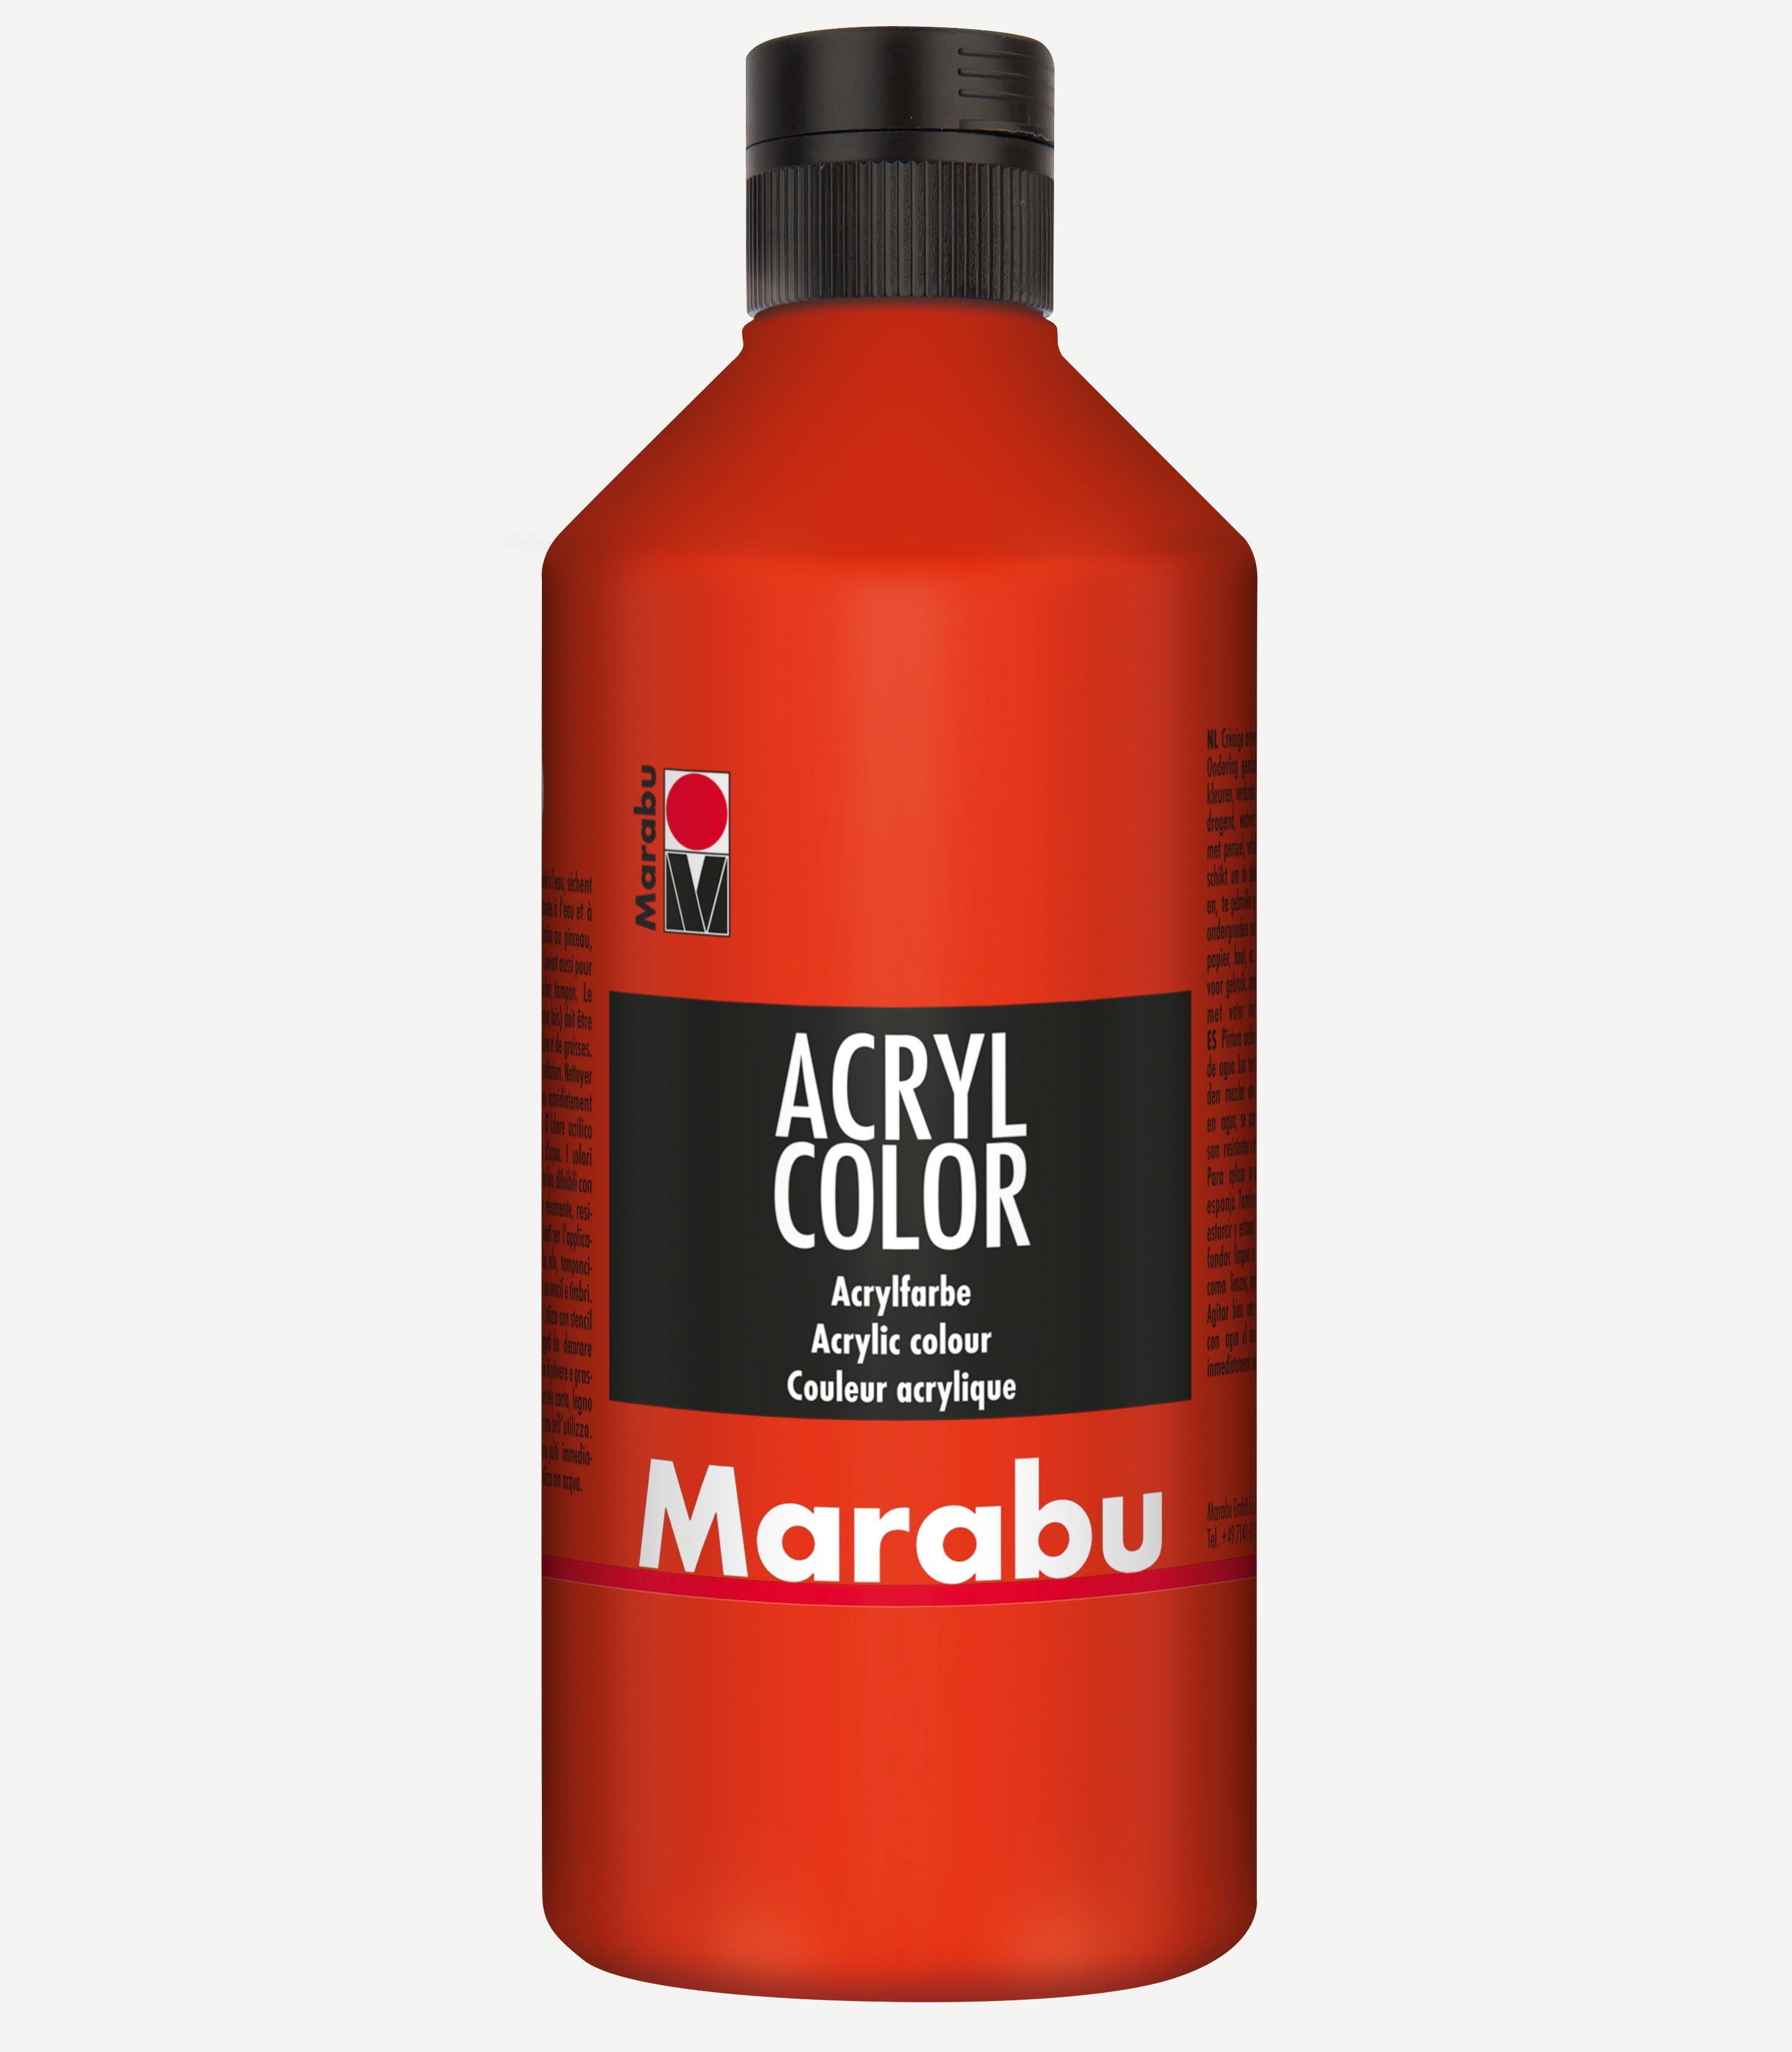 Marabu Acrylfarbe Acryl Color, 500 ml, zinnoberrot 006